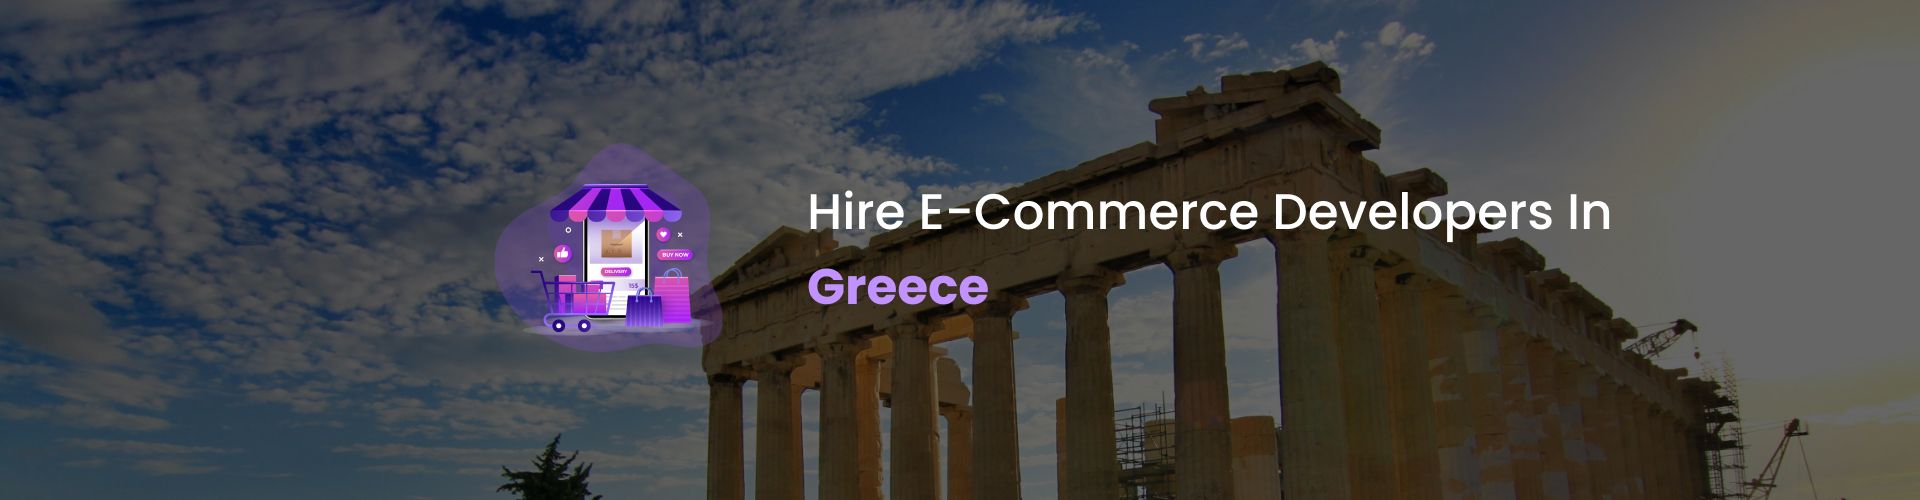 ecommerce developers greece